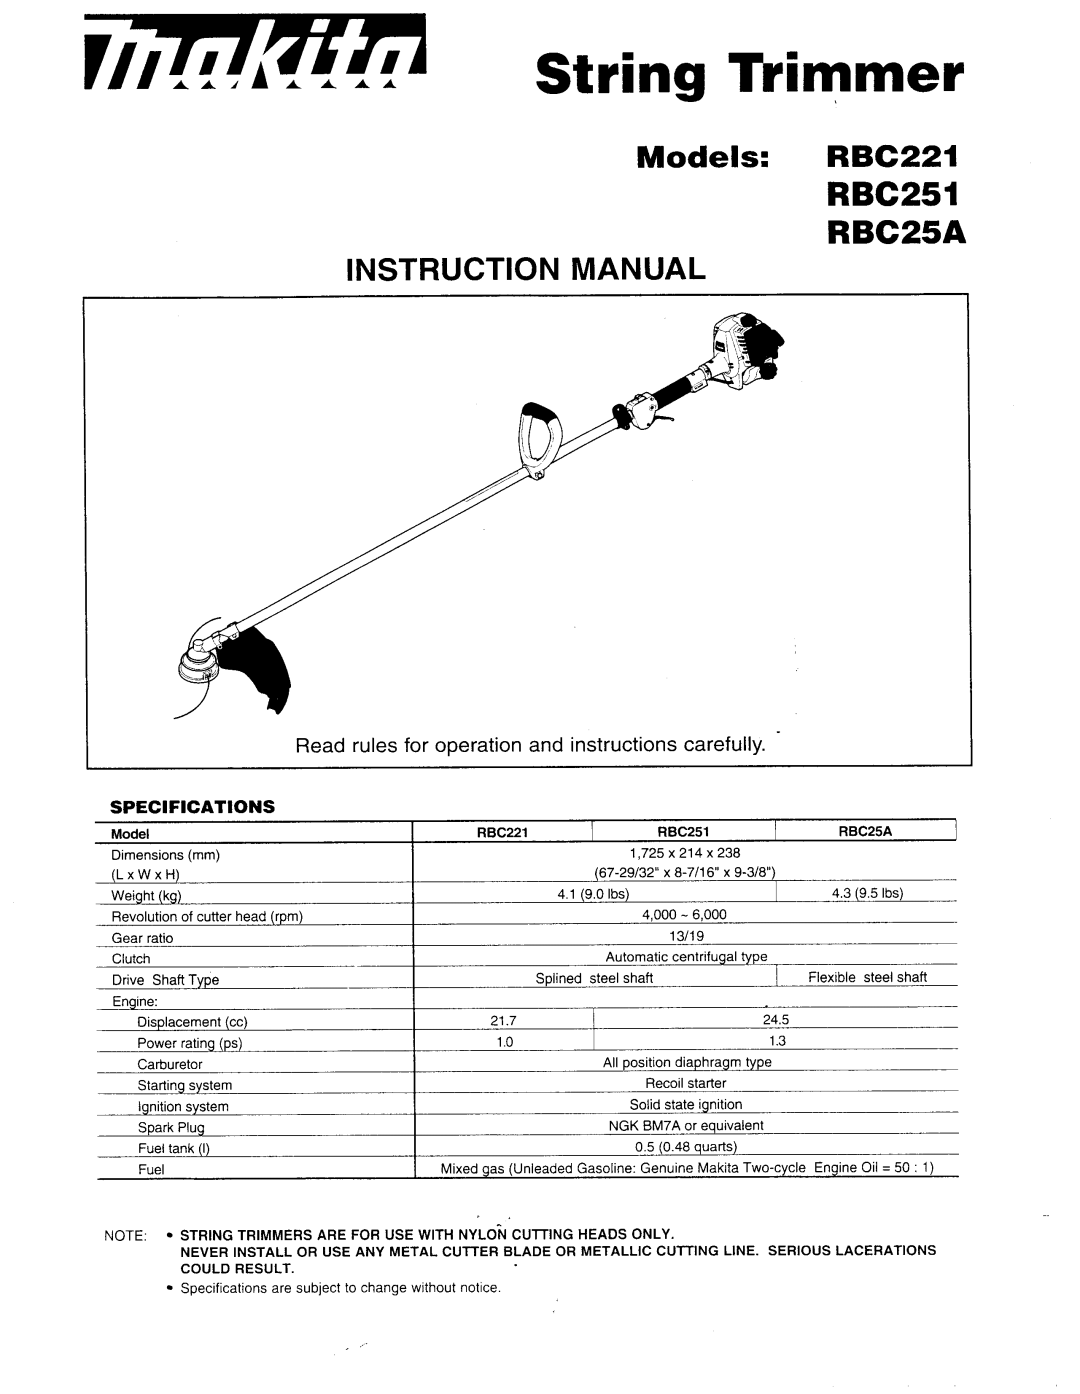 Makita RBC25A instruction manual Models RBC221, String Trimmer, RBC251 